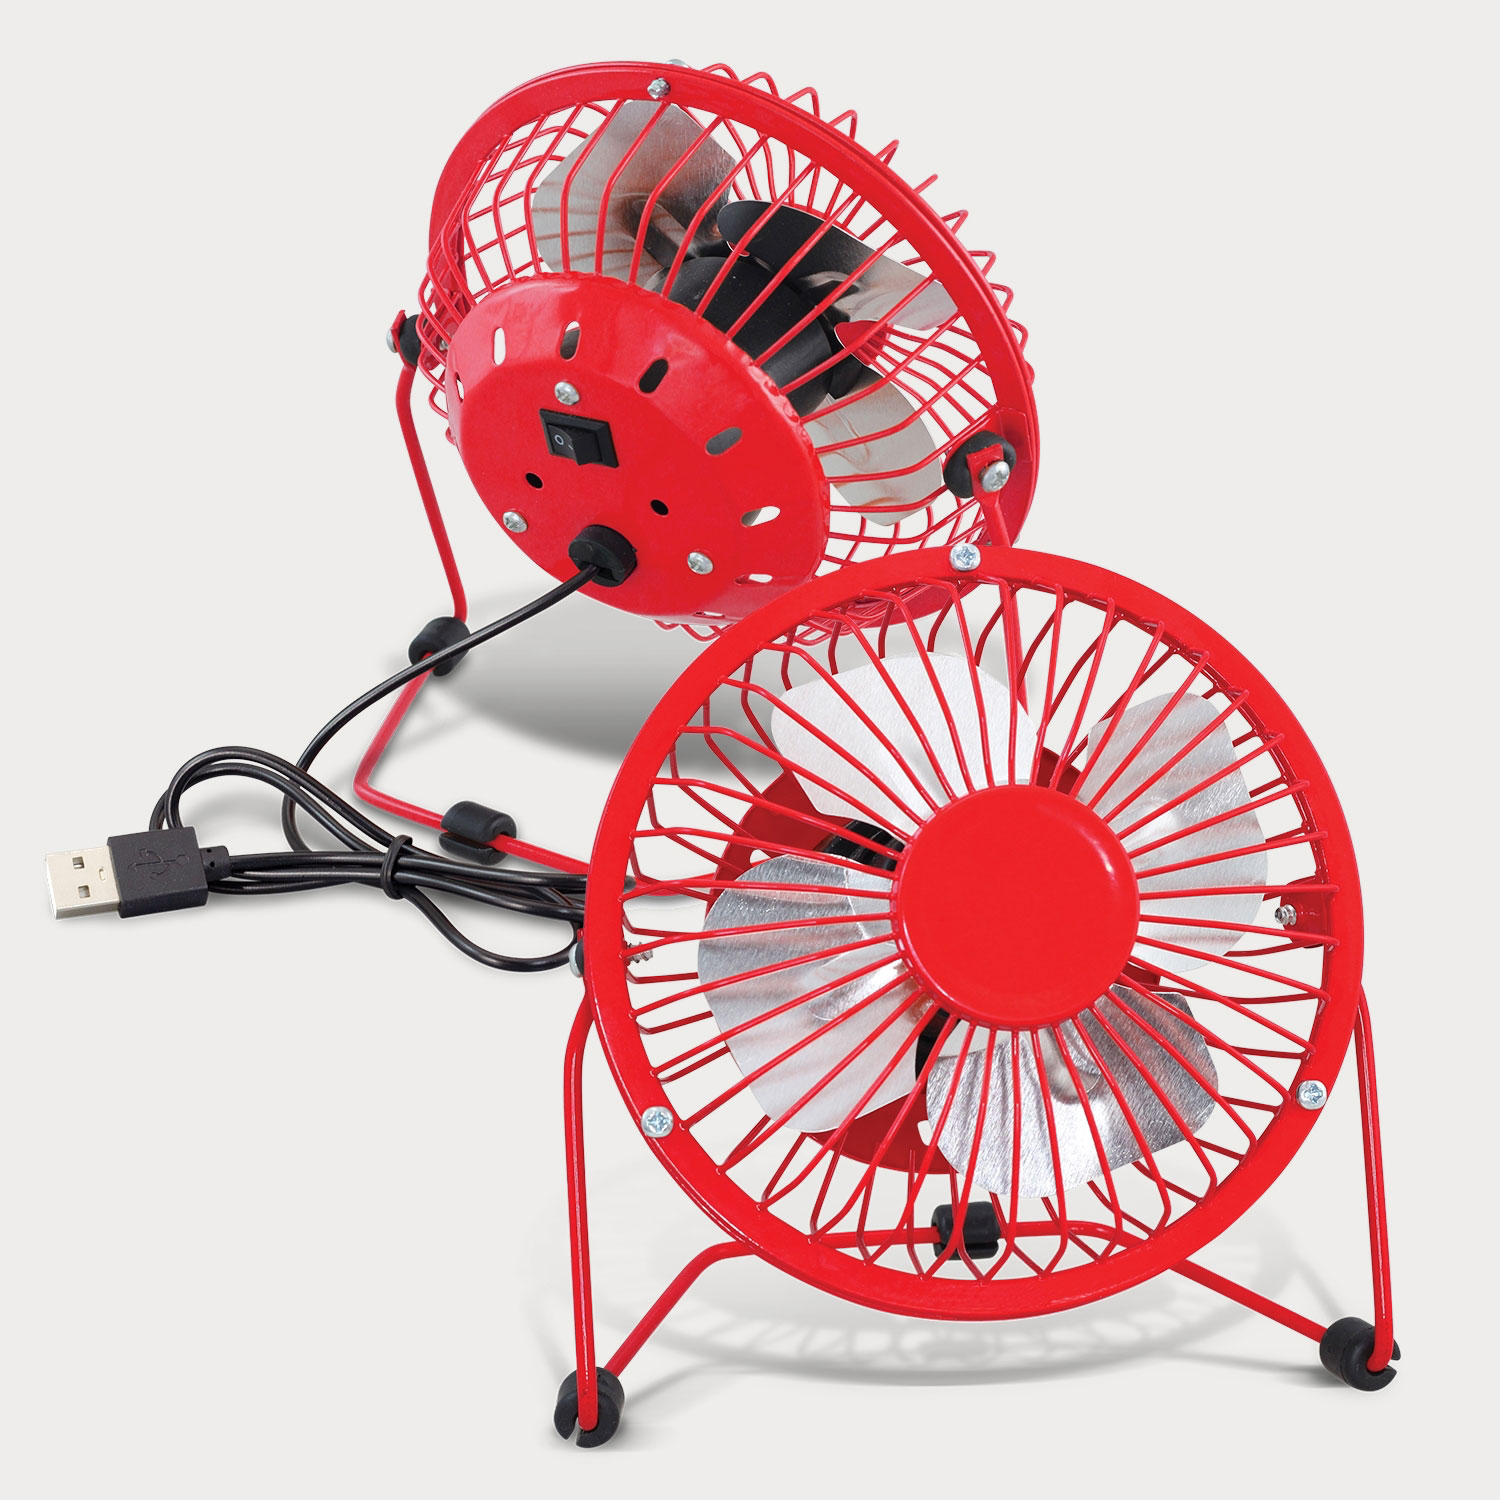 Nexion Desk Fan Primoproducts